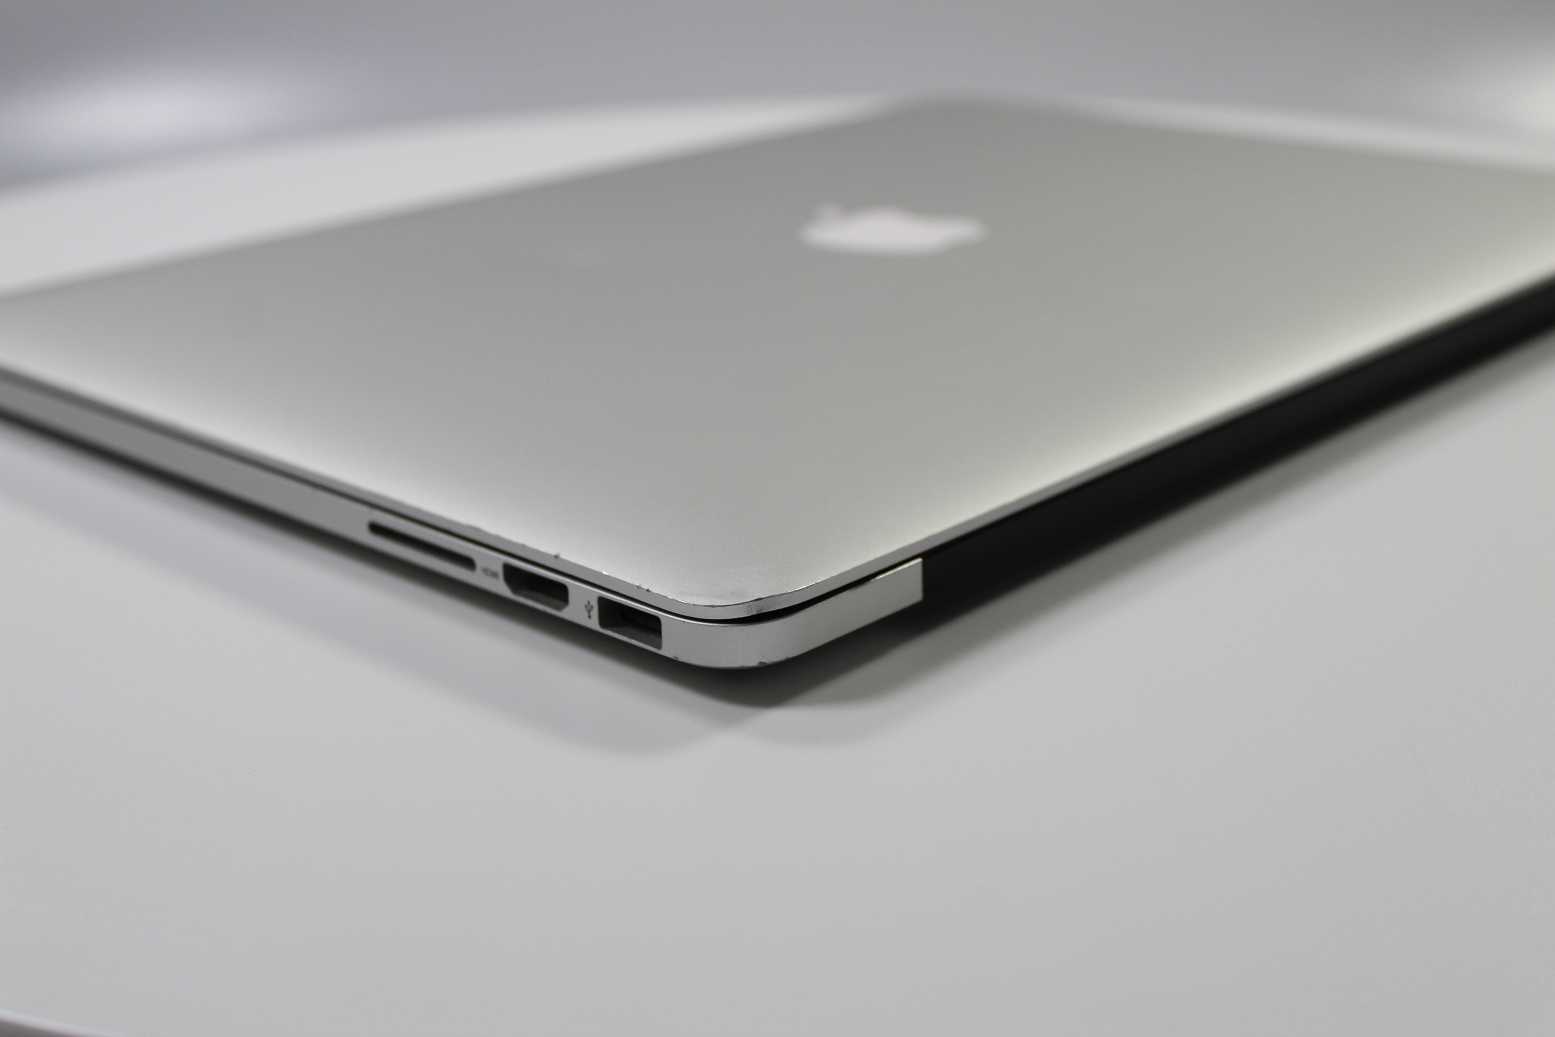 Apple MacBook Pro 15-inch 2014 2.8GHz Core i7 15